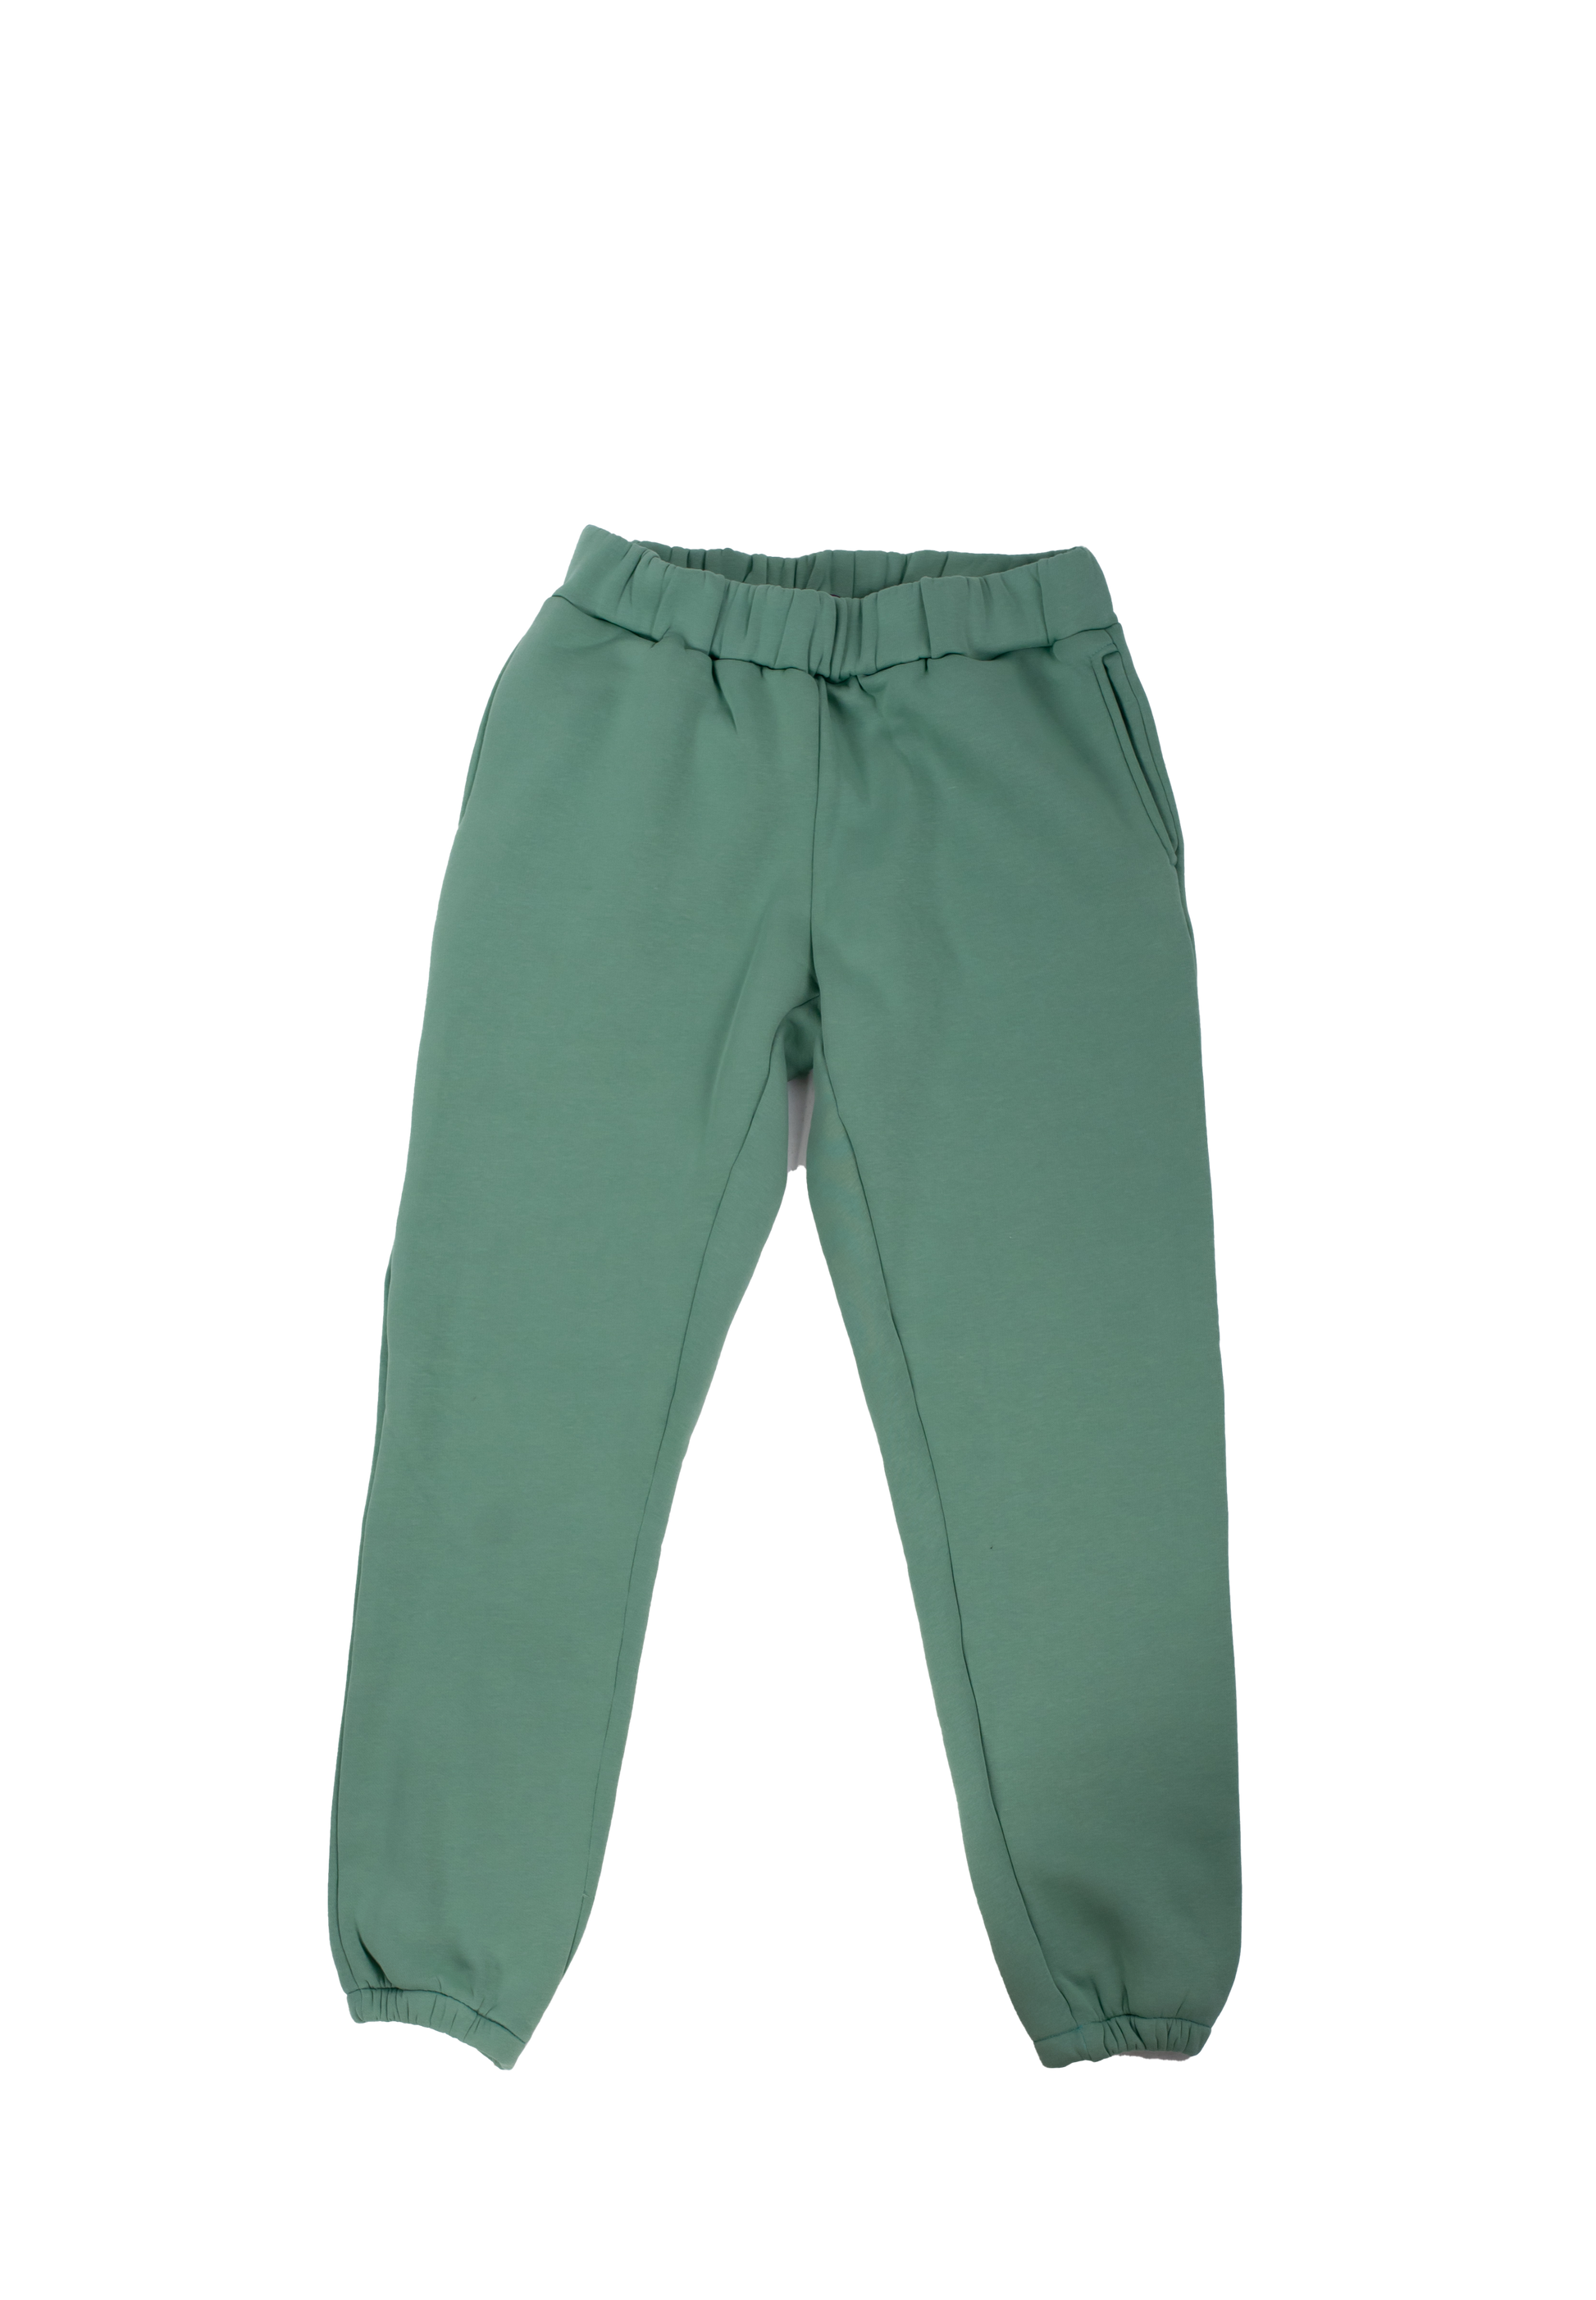 Stylish Mint Green Sweatpants - Comfortable Leisurewear Essential – FRIKOZ